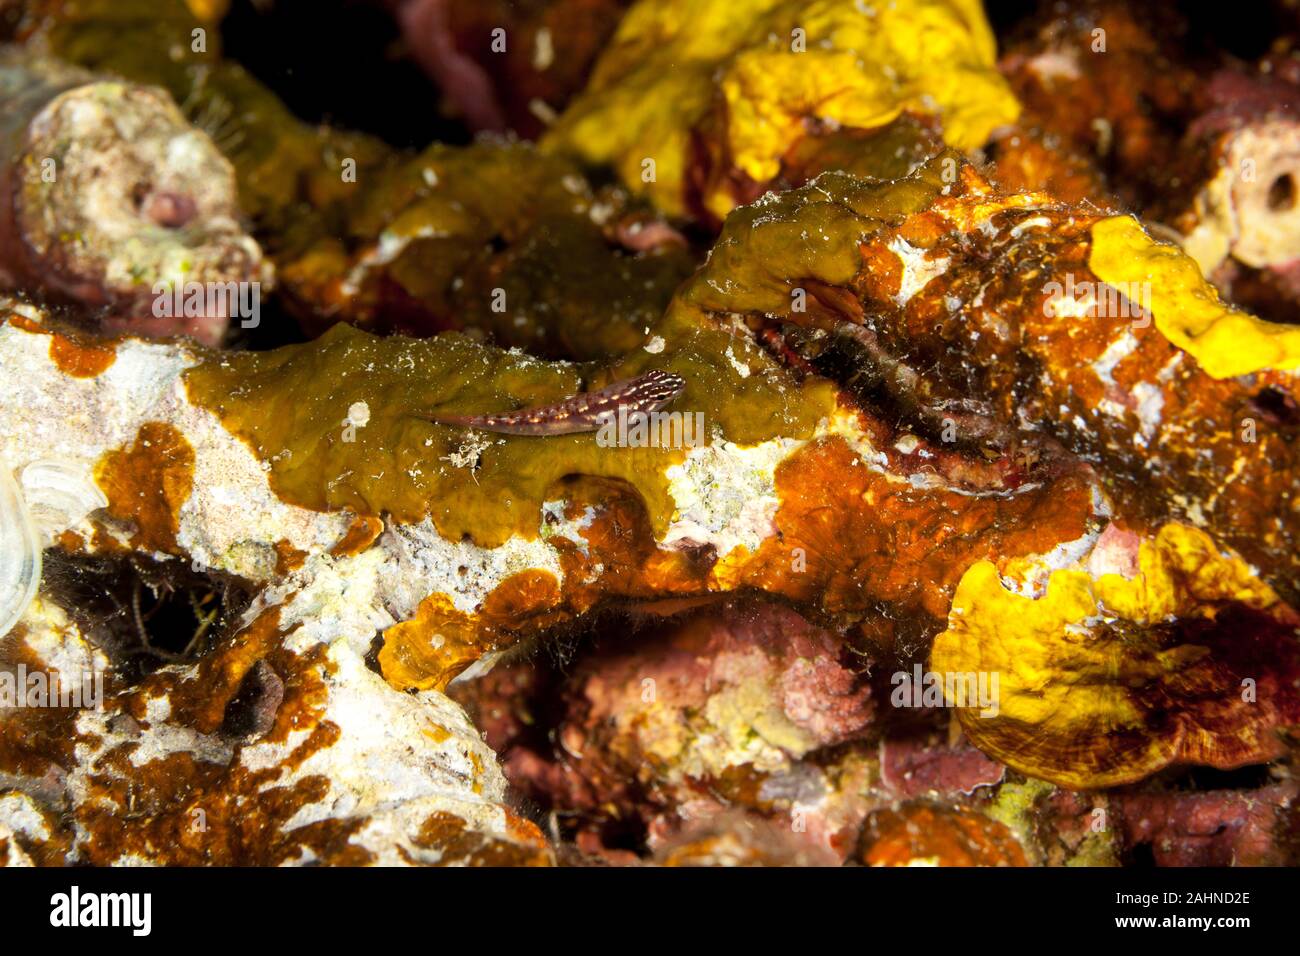 Combtooth blenny, perciform marine fish of the family Blenniidae, Ecsenius Stock Photo